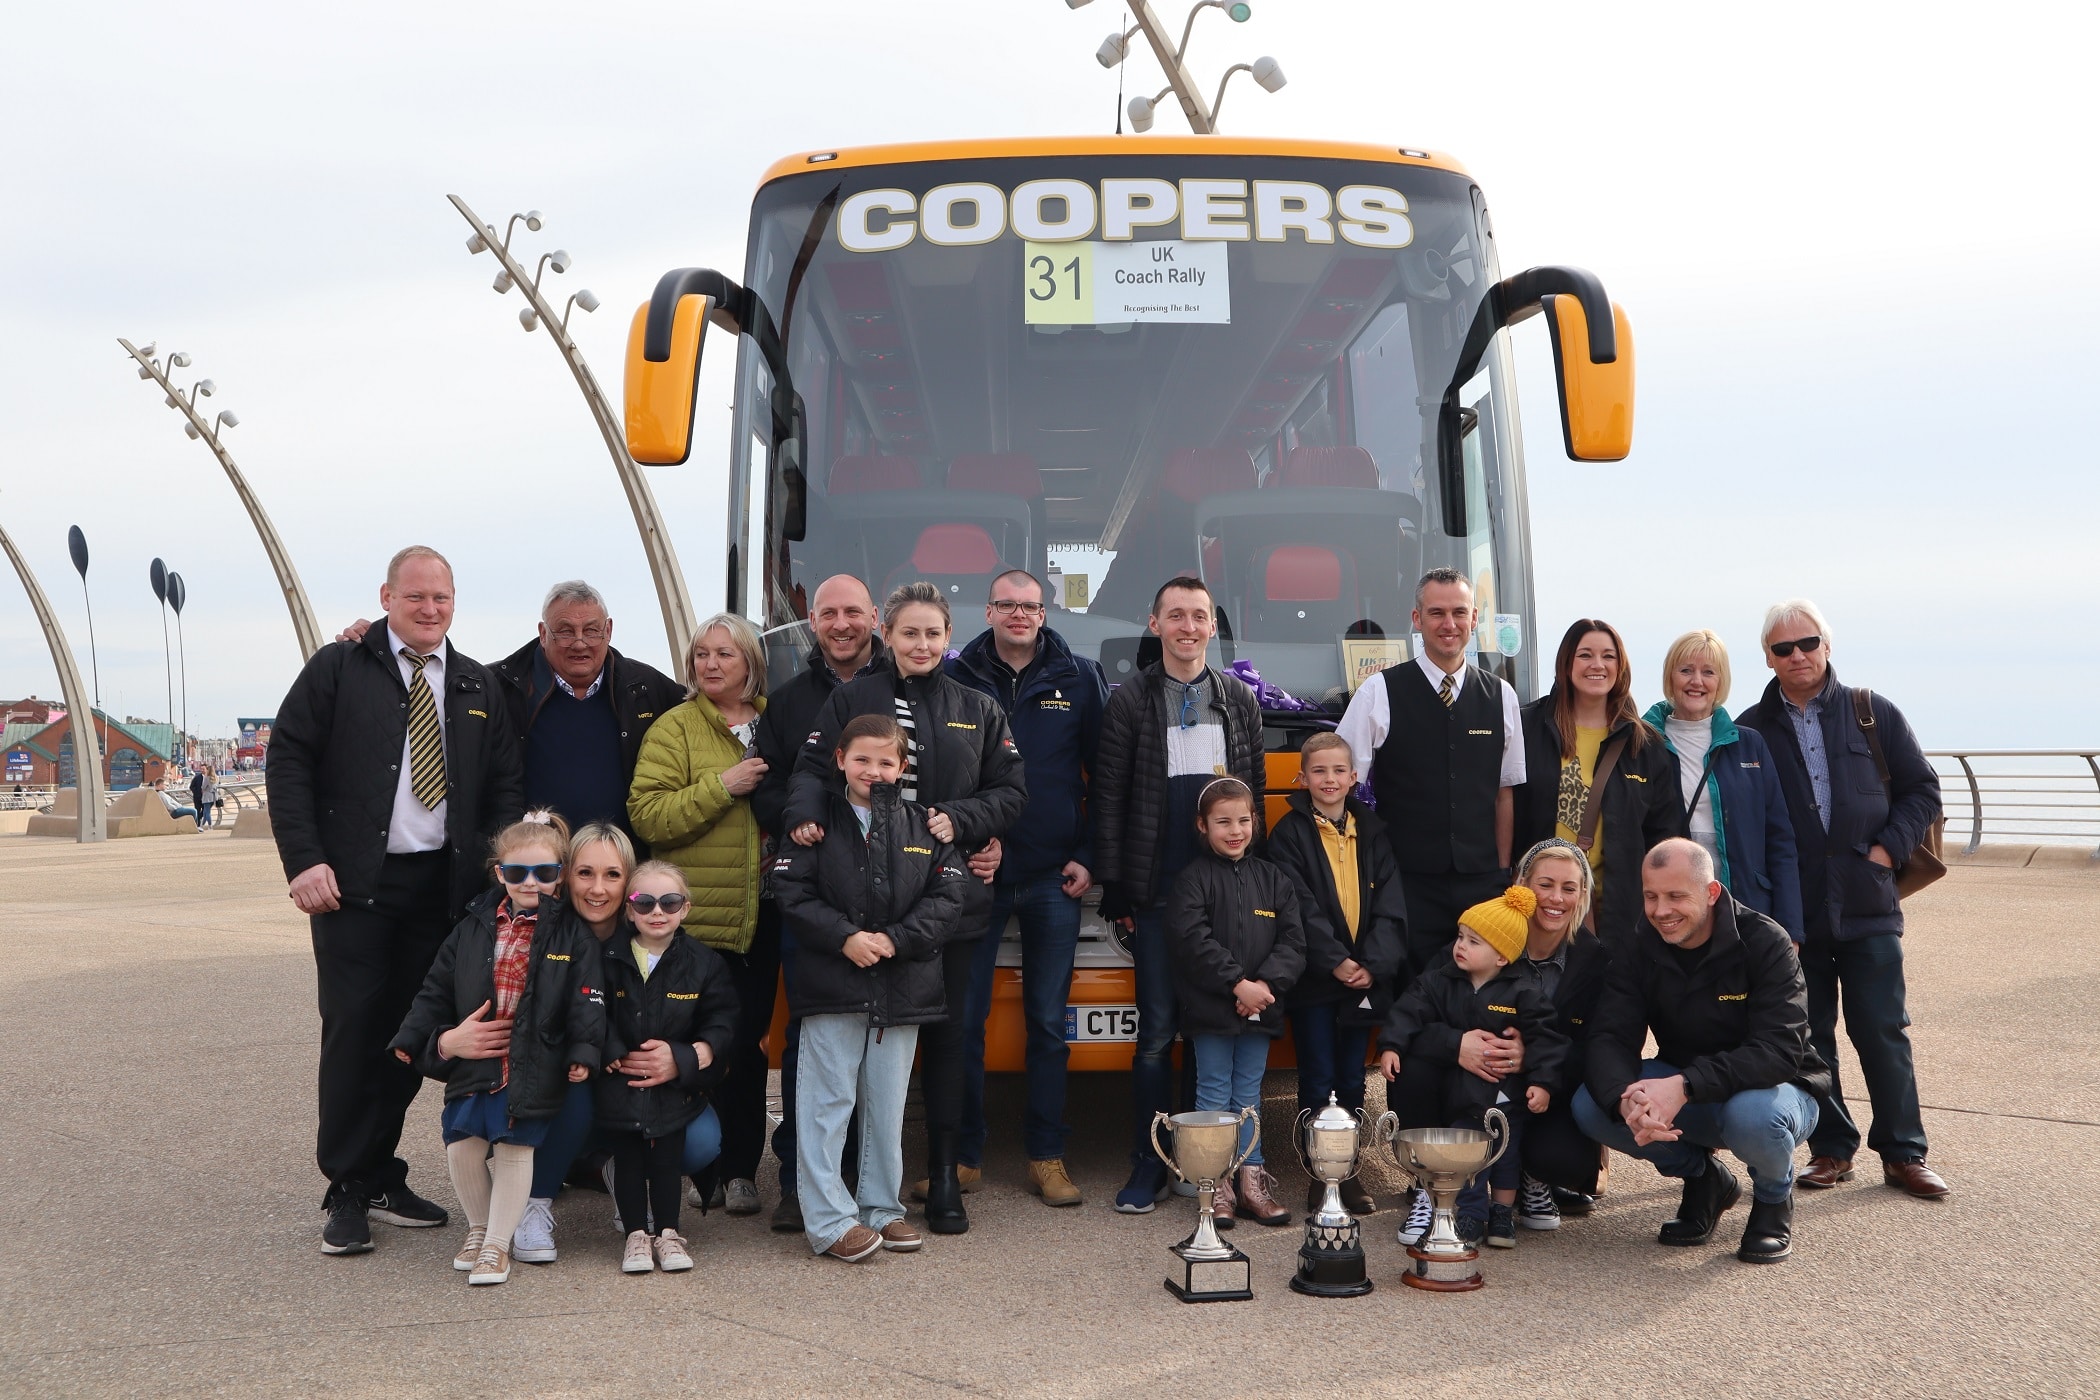 Coopers Tours among UK Coach Rally 2022 winners